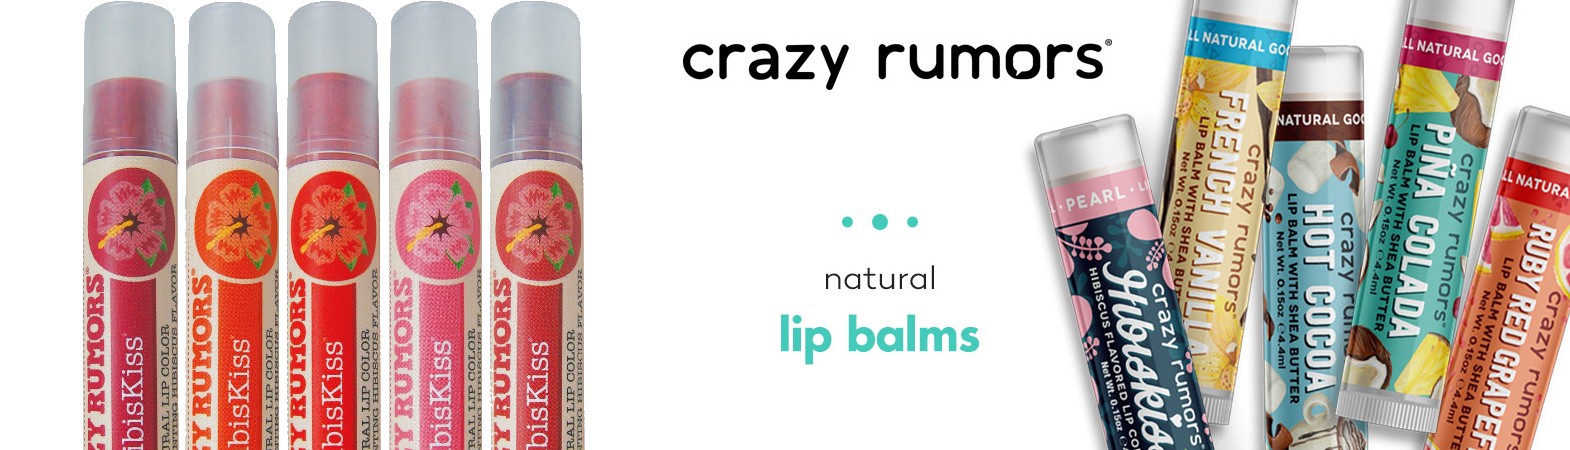 Crazy Rumors - Lips Balms